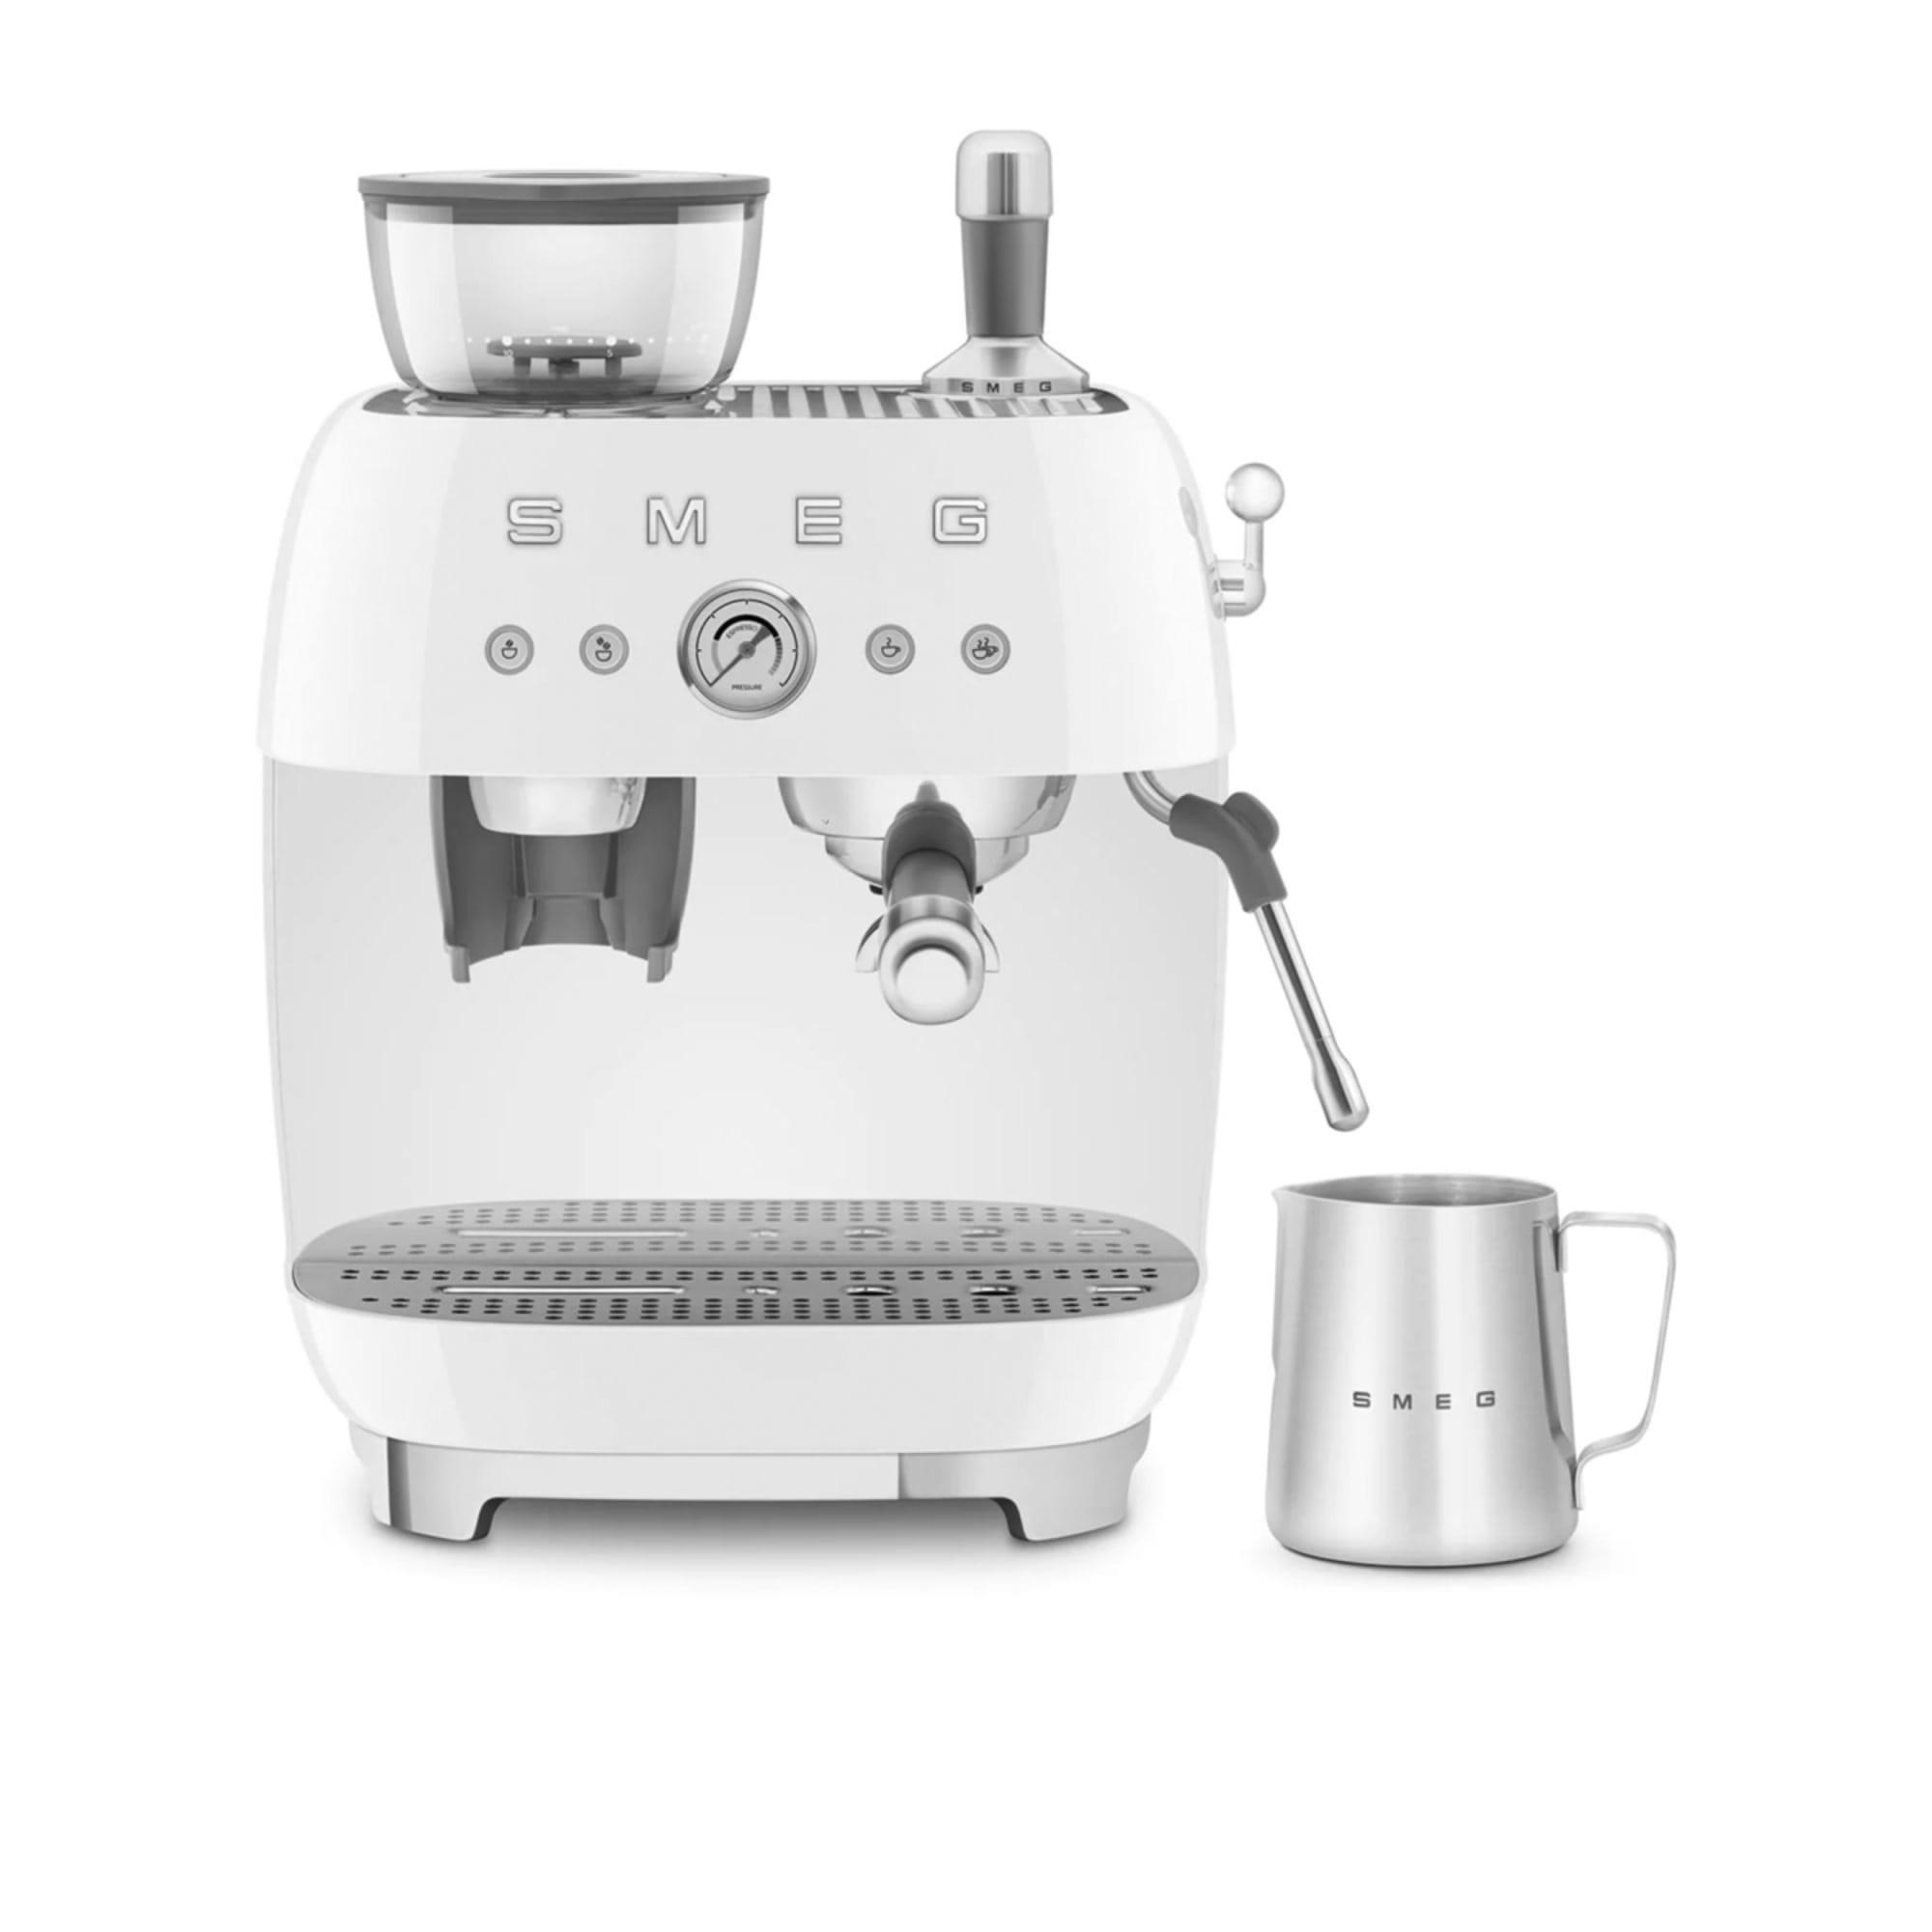 Smeg 50's Retro Style Espresso Machine with Built In Grinder White Image 2